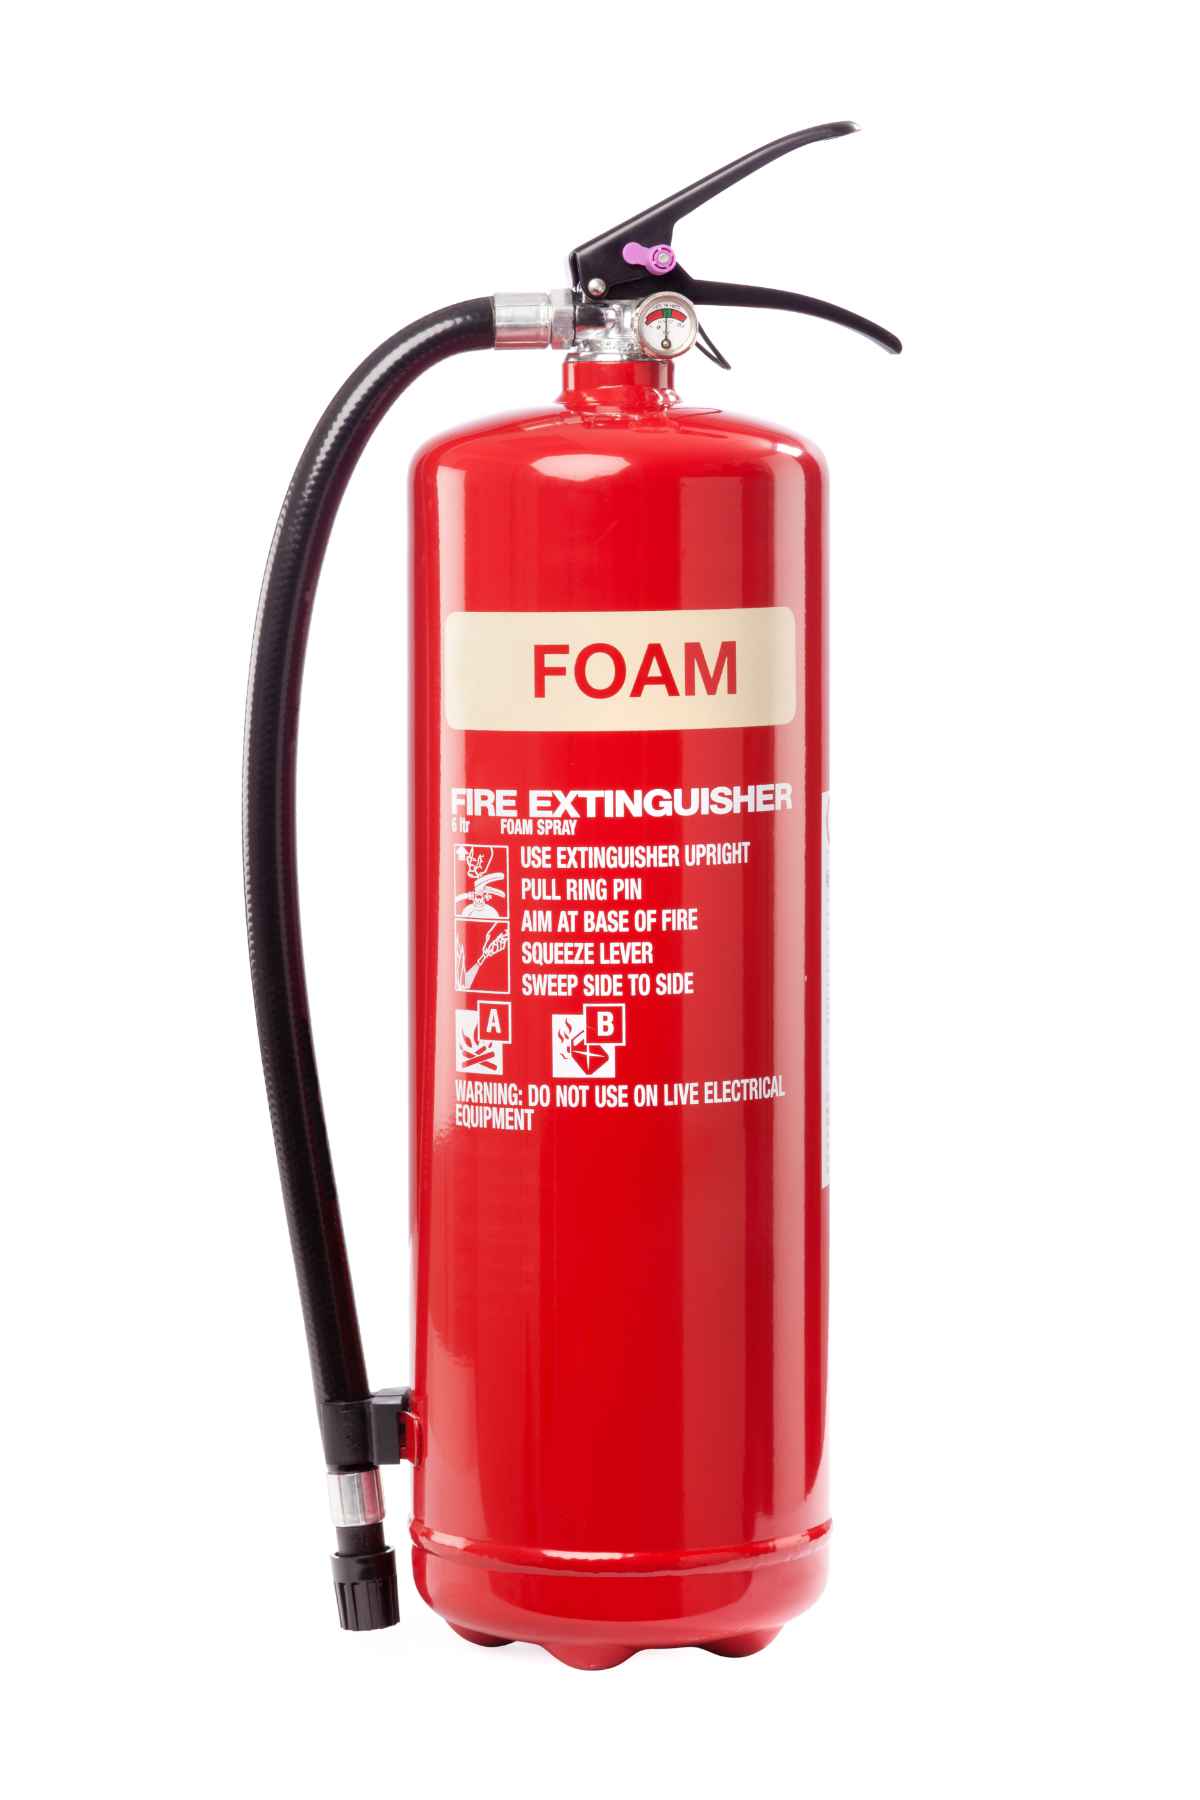 Foam fire extinguisher on white